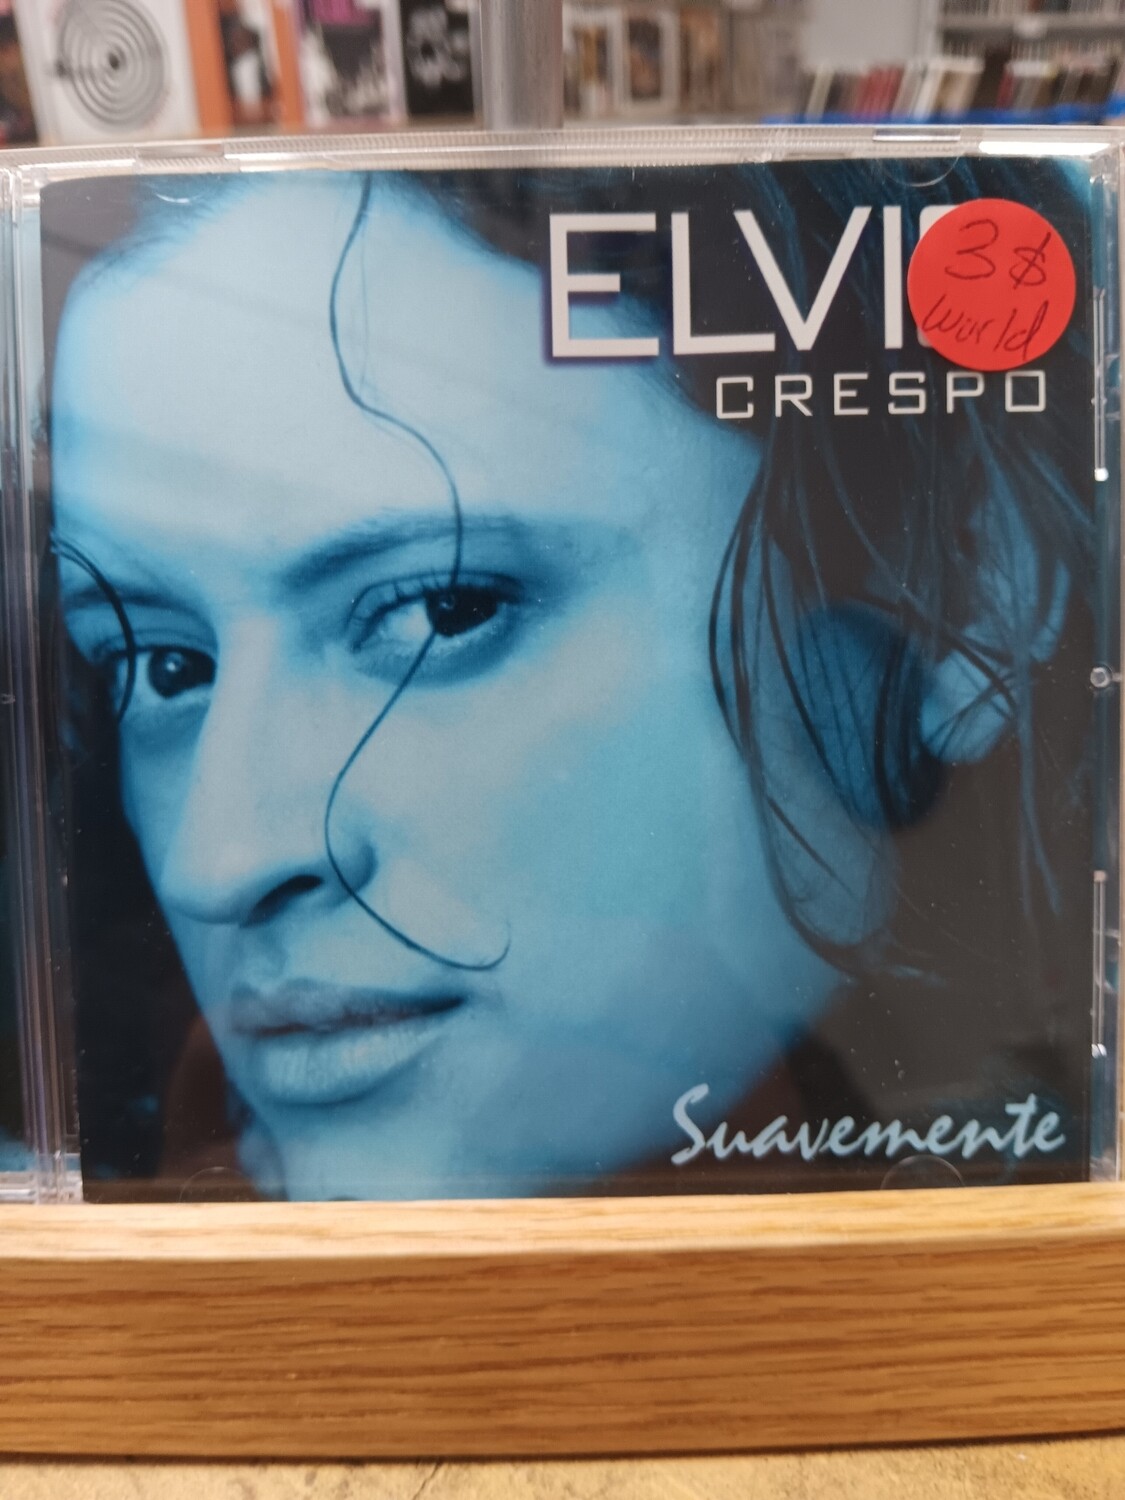 ELVIS CRESPO - Suavemente (CD)